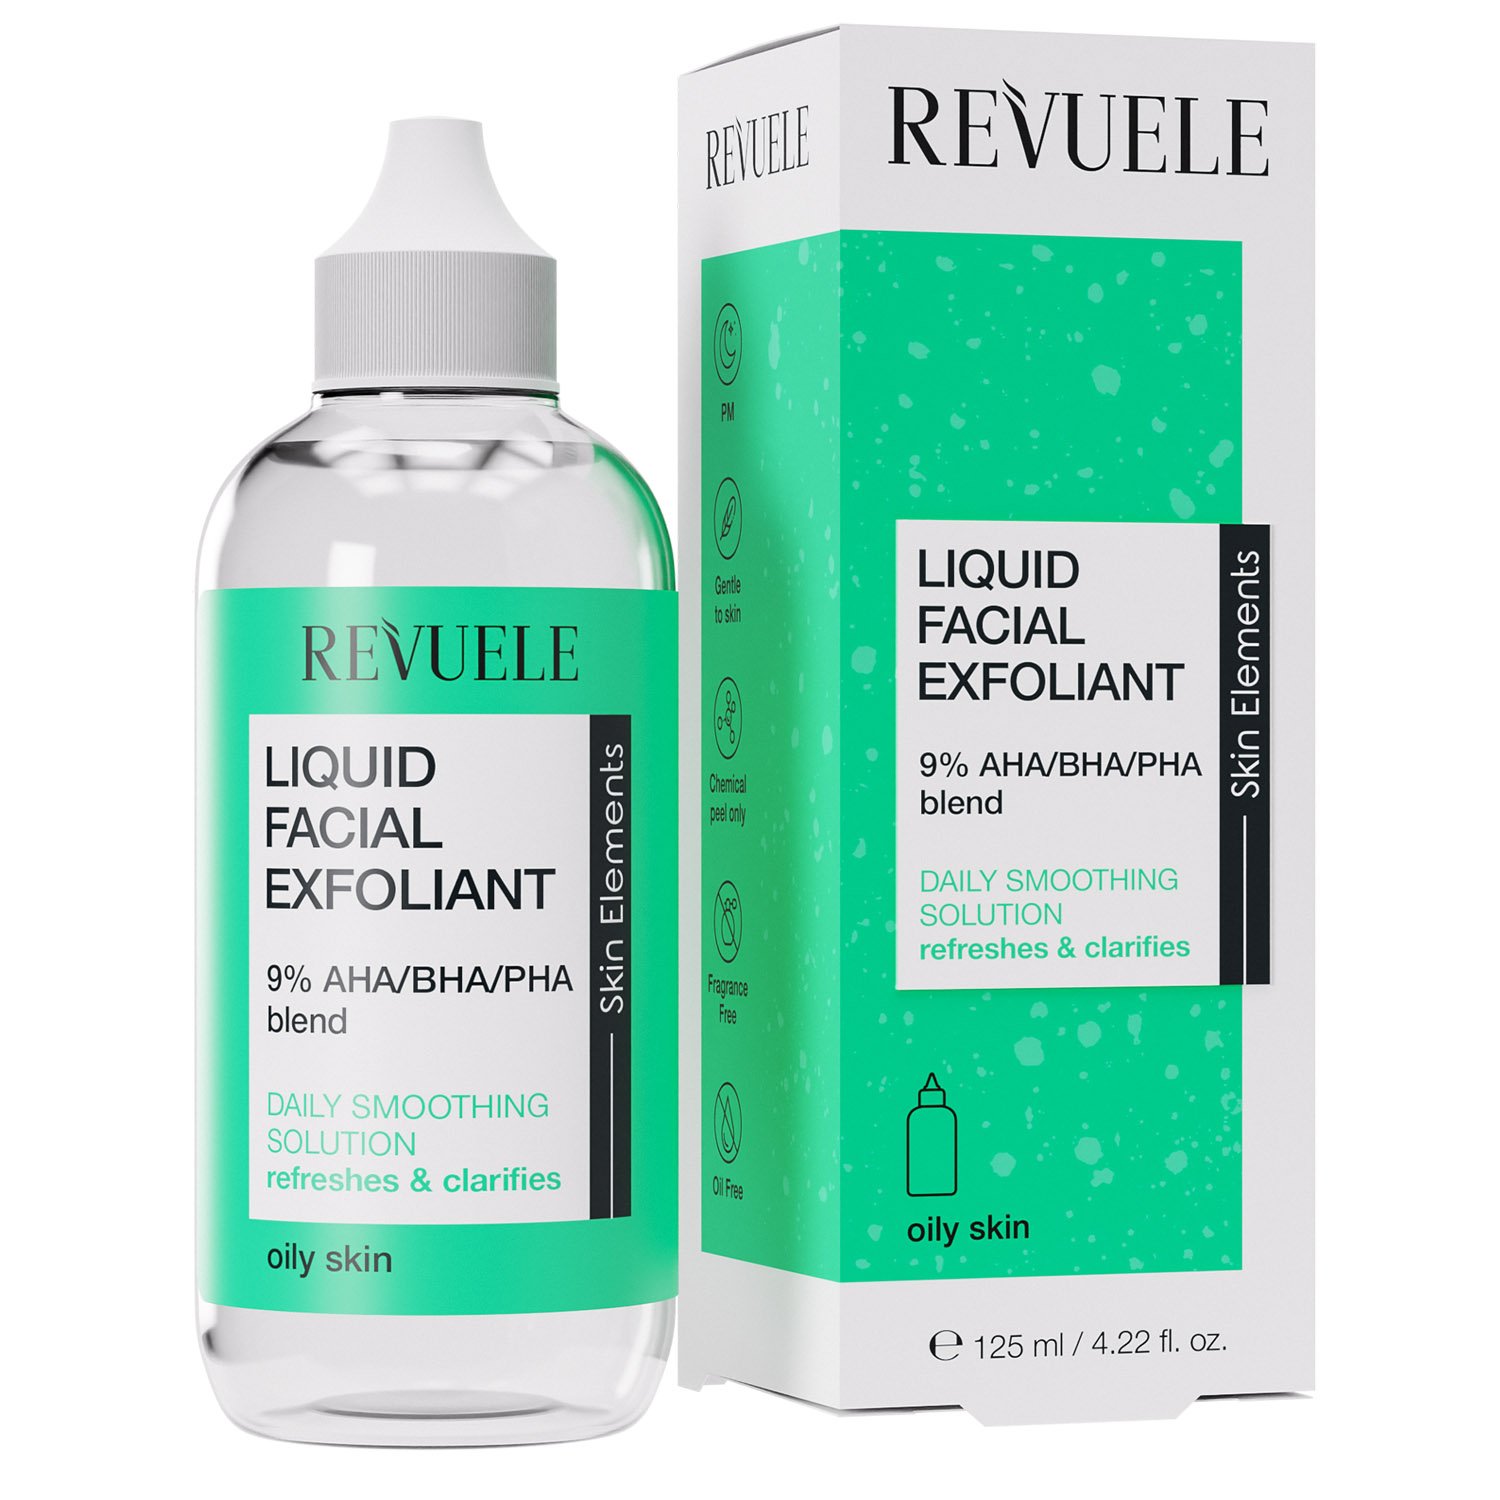 Эксфолиант Revuele Liquid Facial Exfoliant 9% AHA/BHA/PHA blend для жирной кожи, 125 мл - фото 1